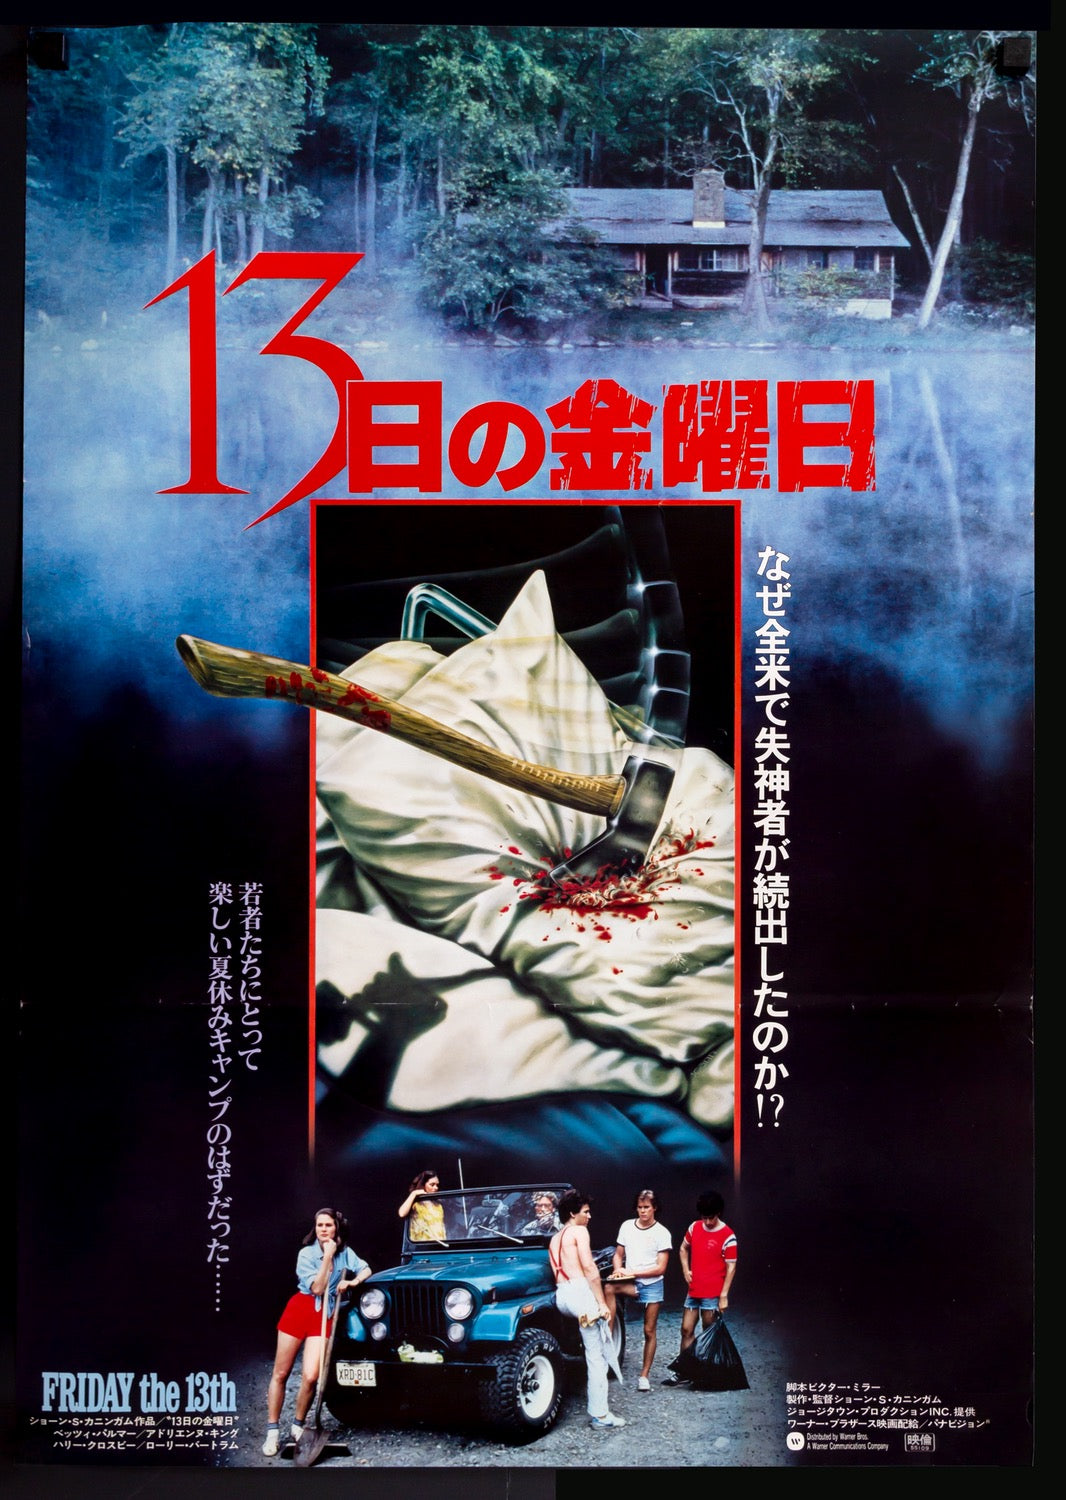 Friday the 13th (1980) original movie poster for sale at Original Film Art